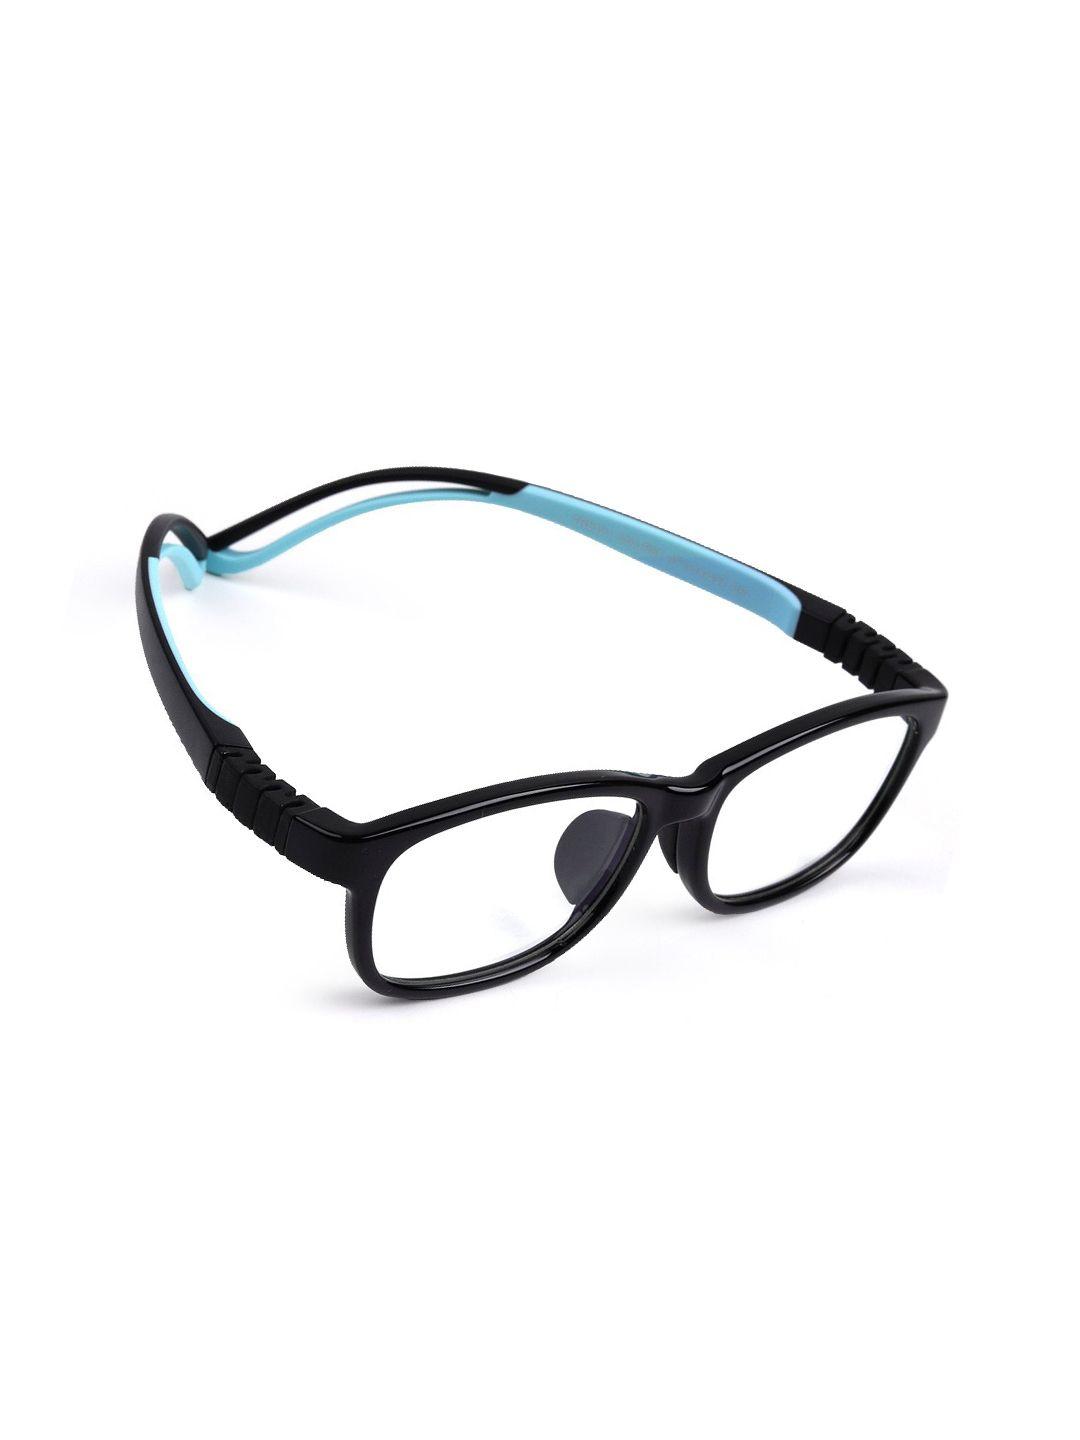 aeropostale boys black & blue rectangle sunglasses 5121_c01